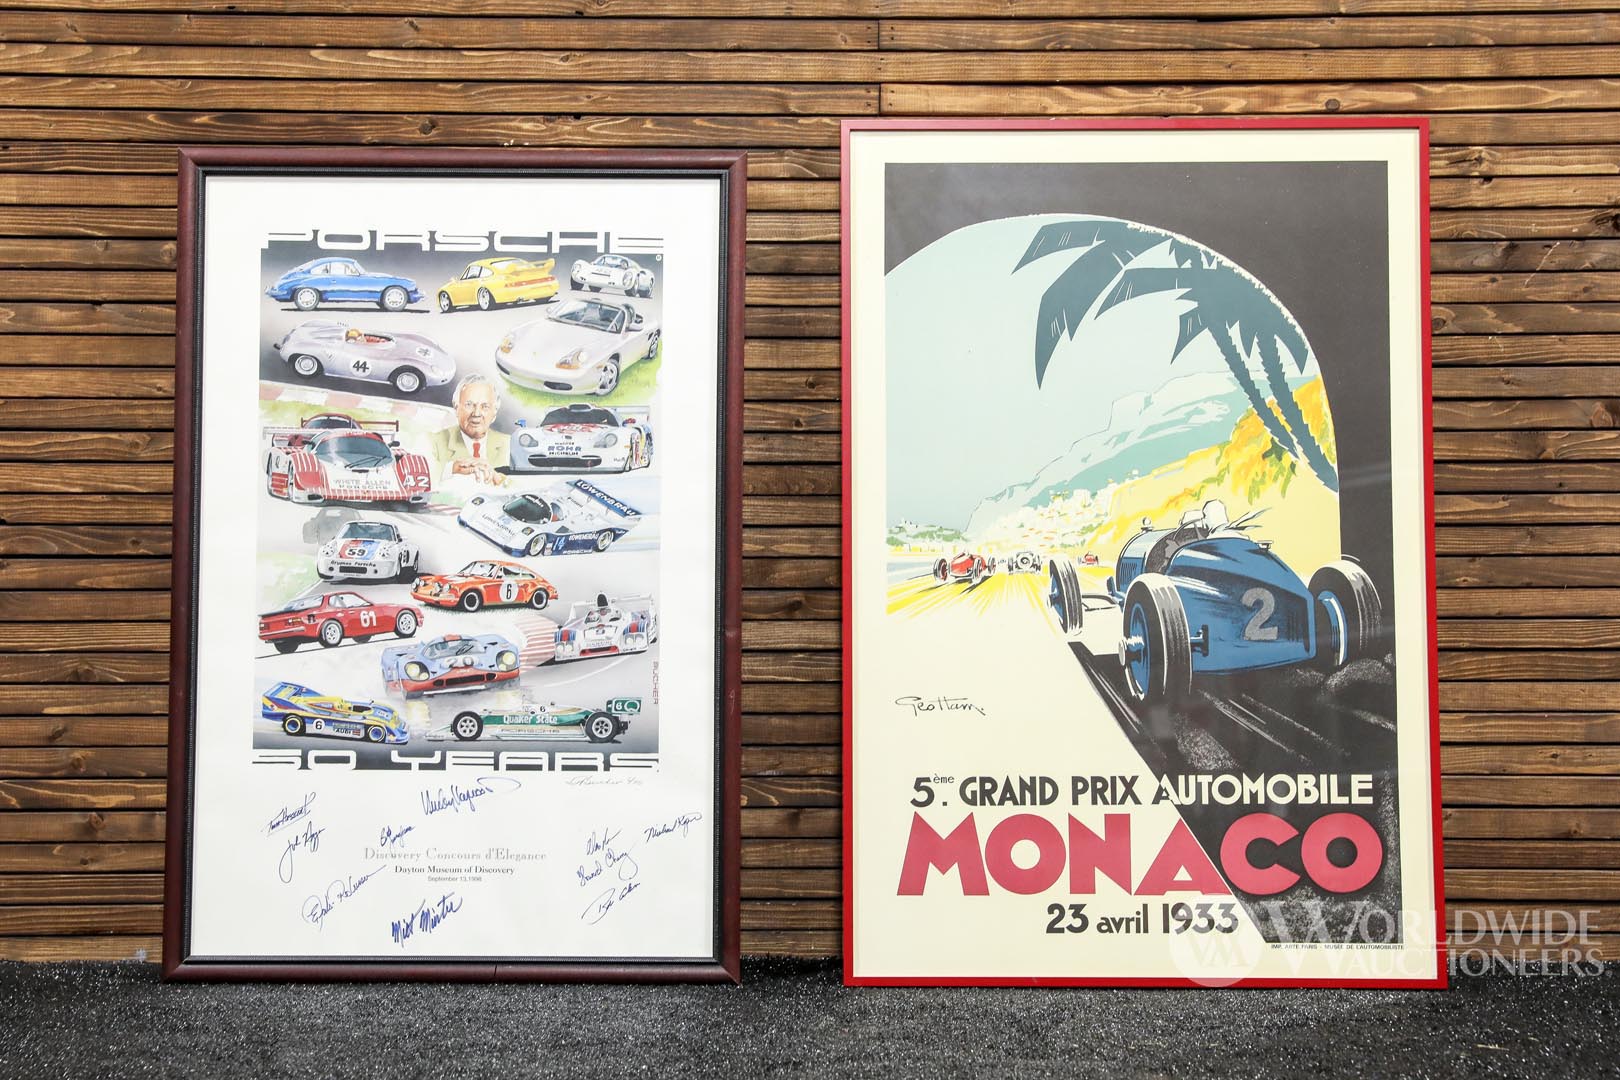 Set of Two Prints - Monaco Grand Prix and Dayton Concours